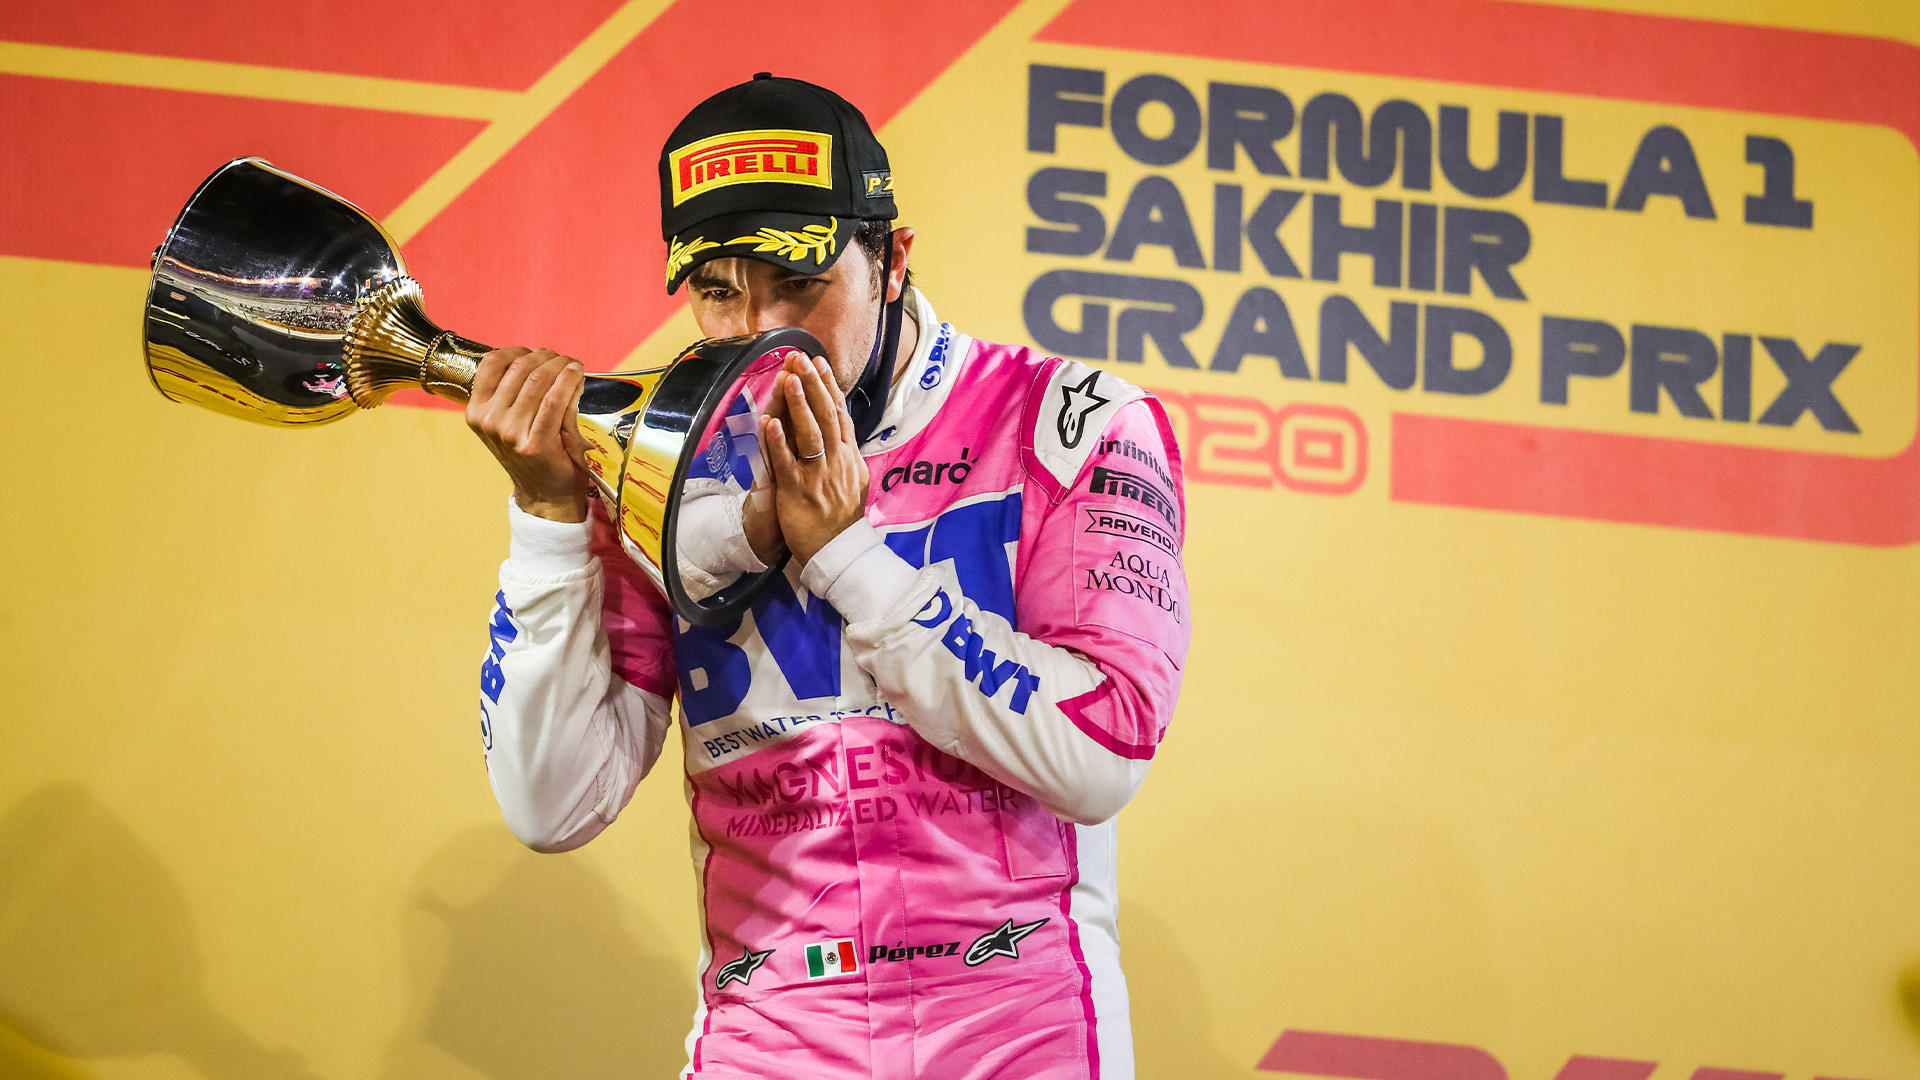 Sergio Perez wins Sakhir Grand Prix 2020_40.1